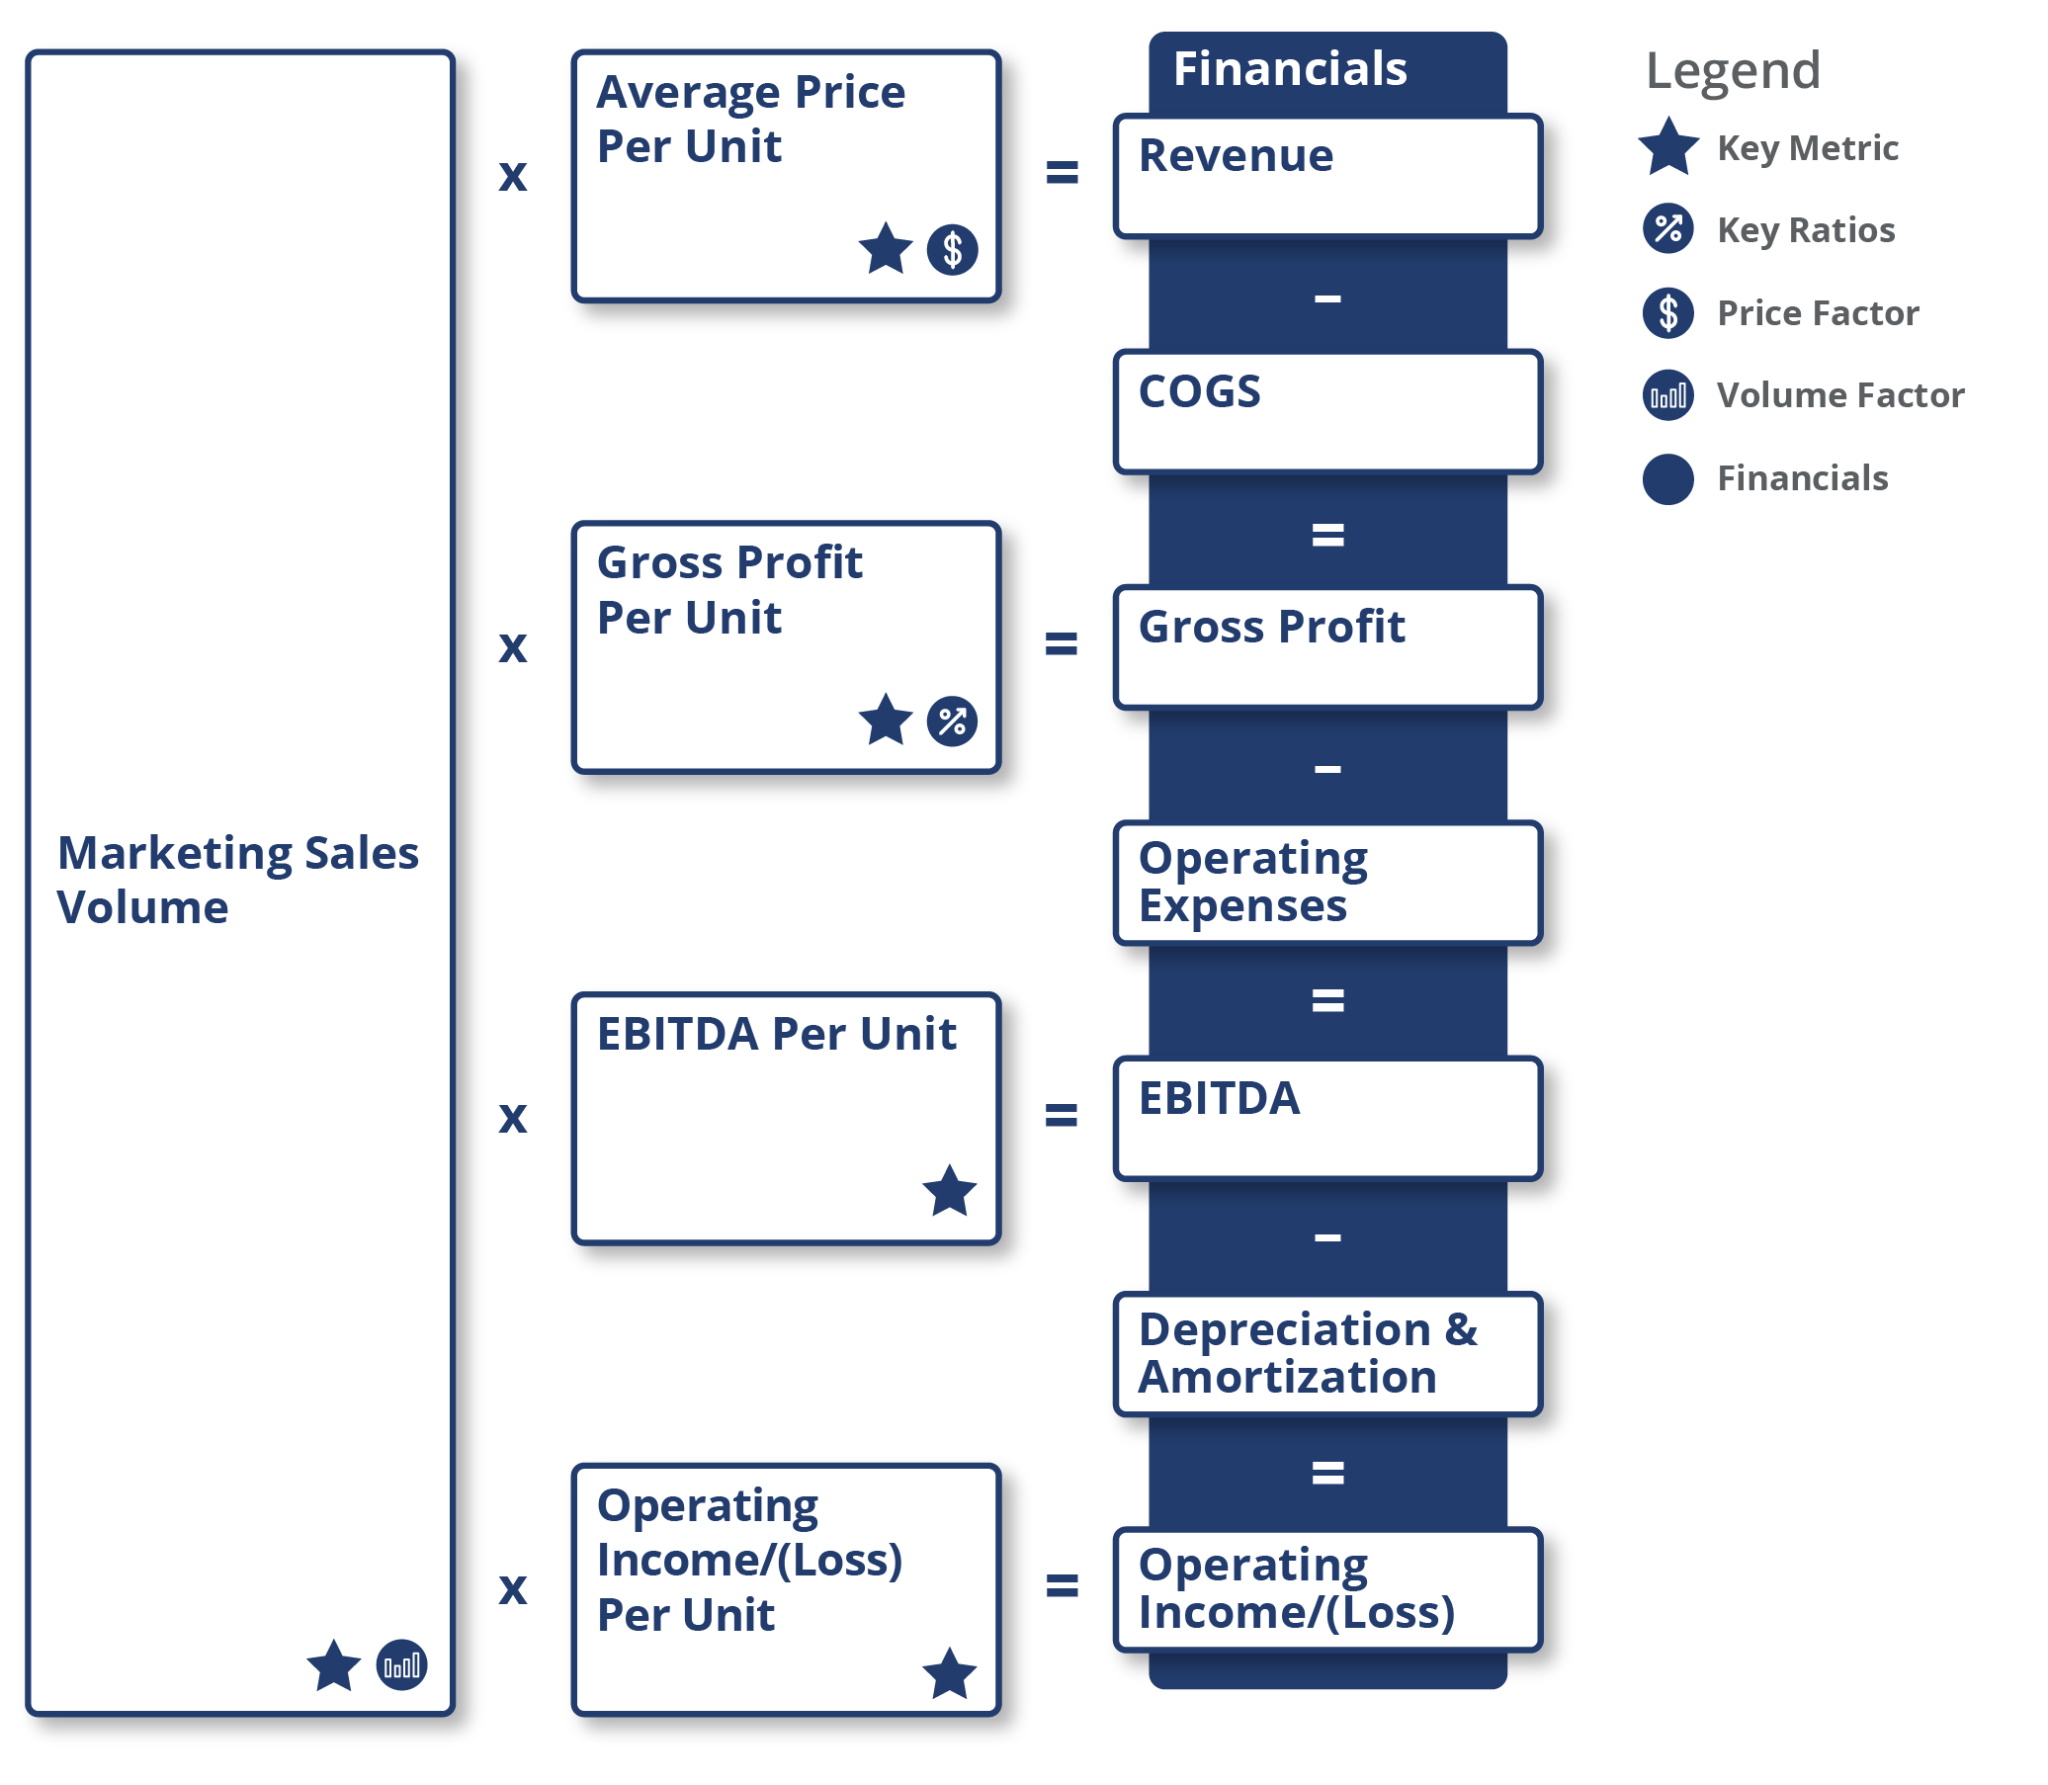 ADC VA Marketing Diagram V